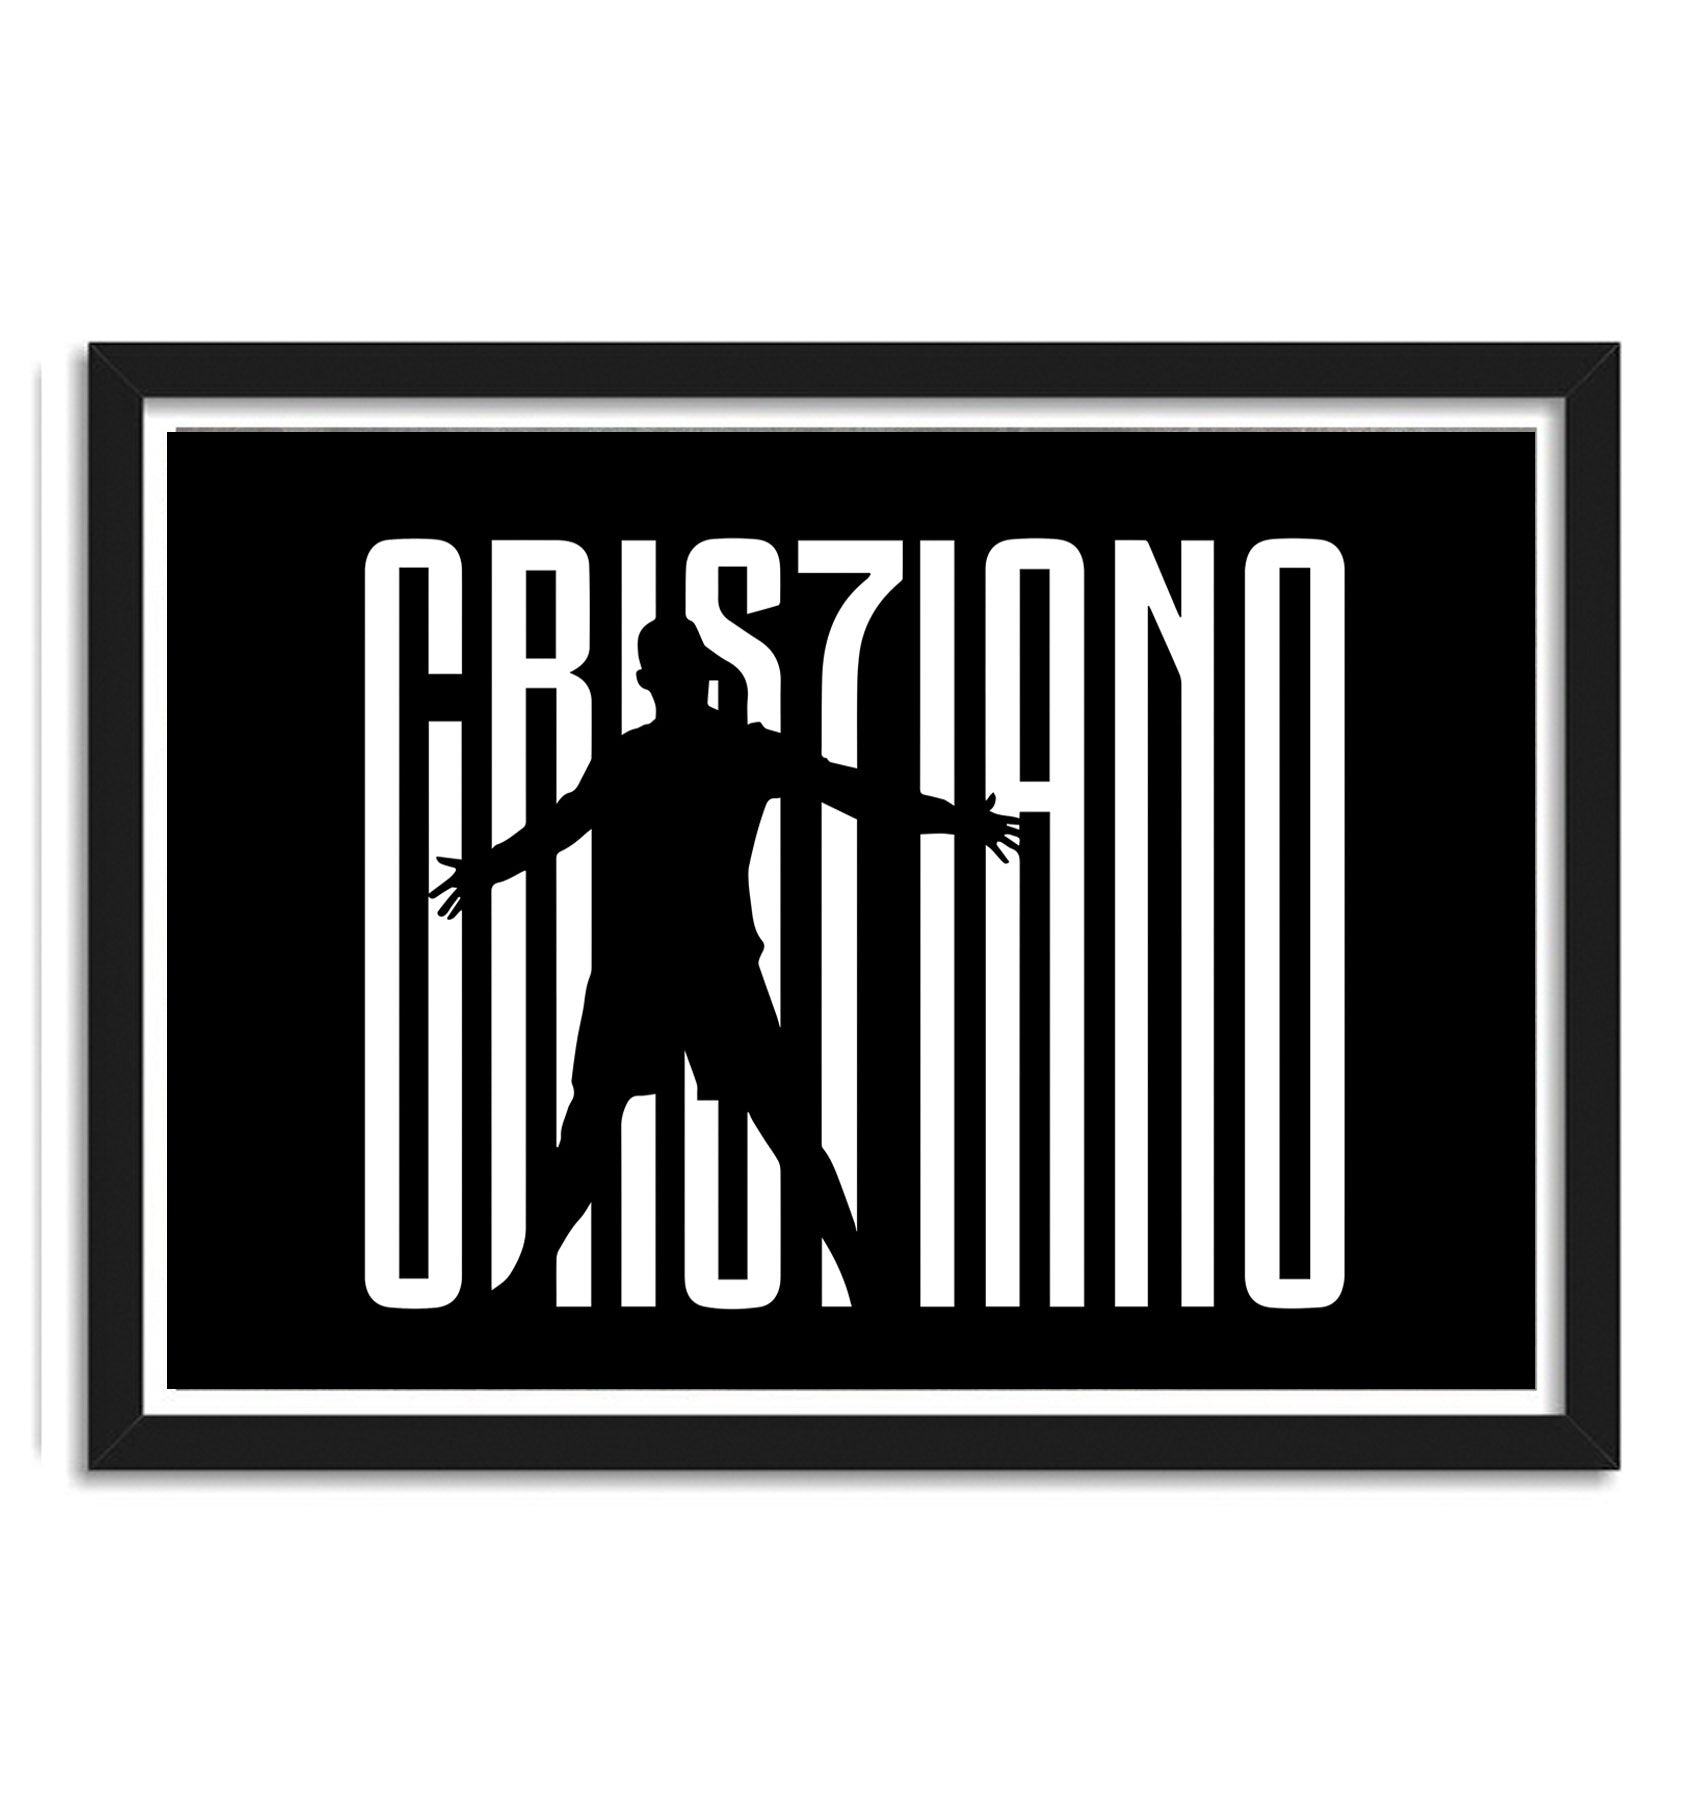 SALE Cristiano Ronaldo Silhouette Png Jpg Svg Eps Files High Resolution  BV-SP-0030 - Etsy Israel